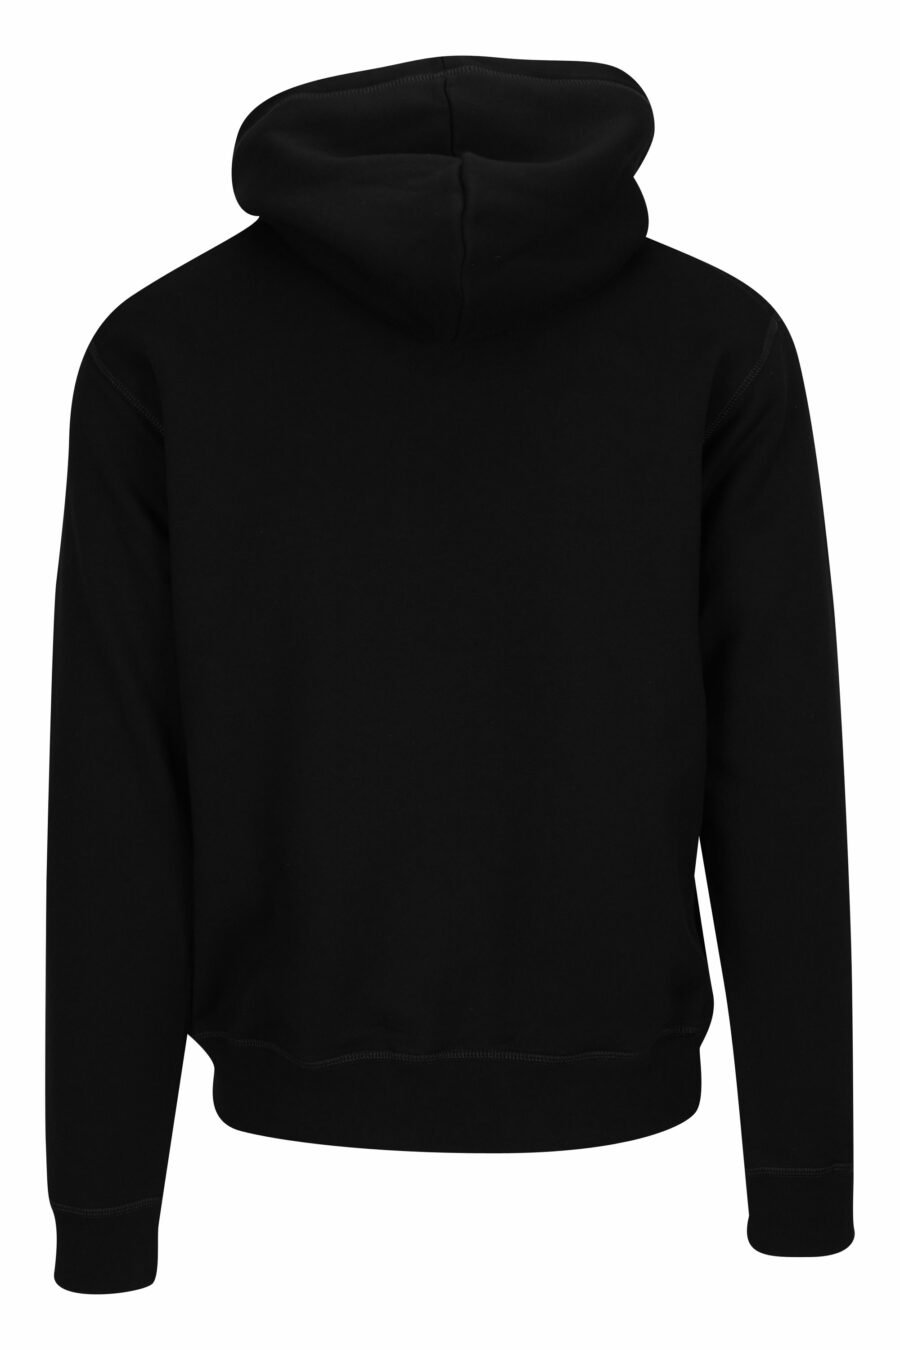 Black hooded sweatshirt with neon green blurred "icon" maxilogue - 8054148360436 1